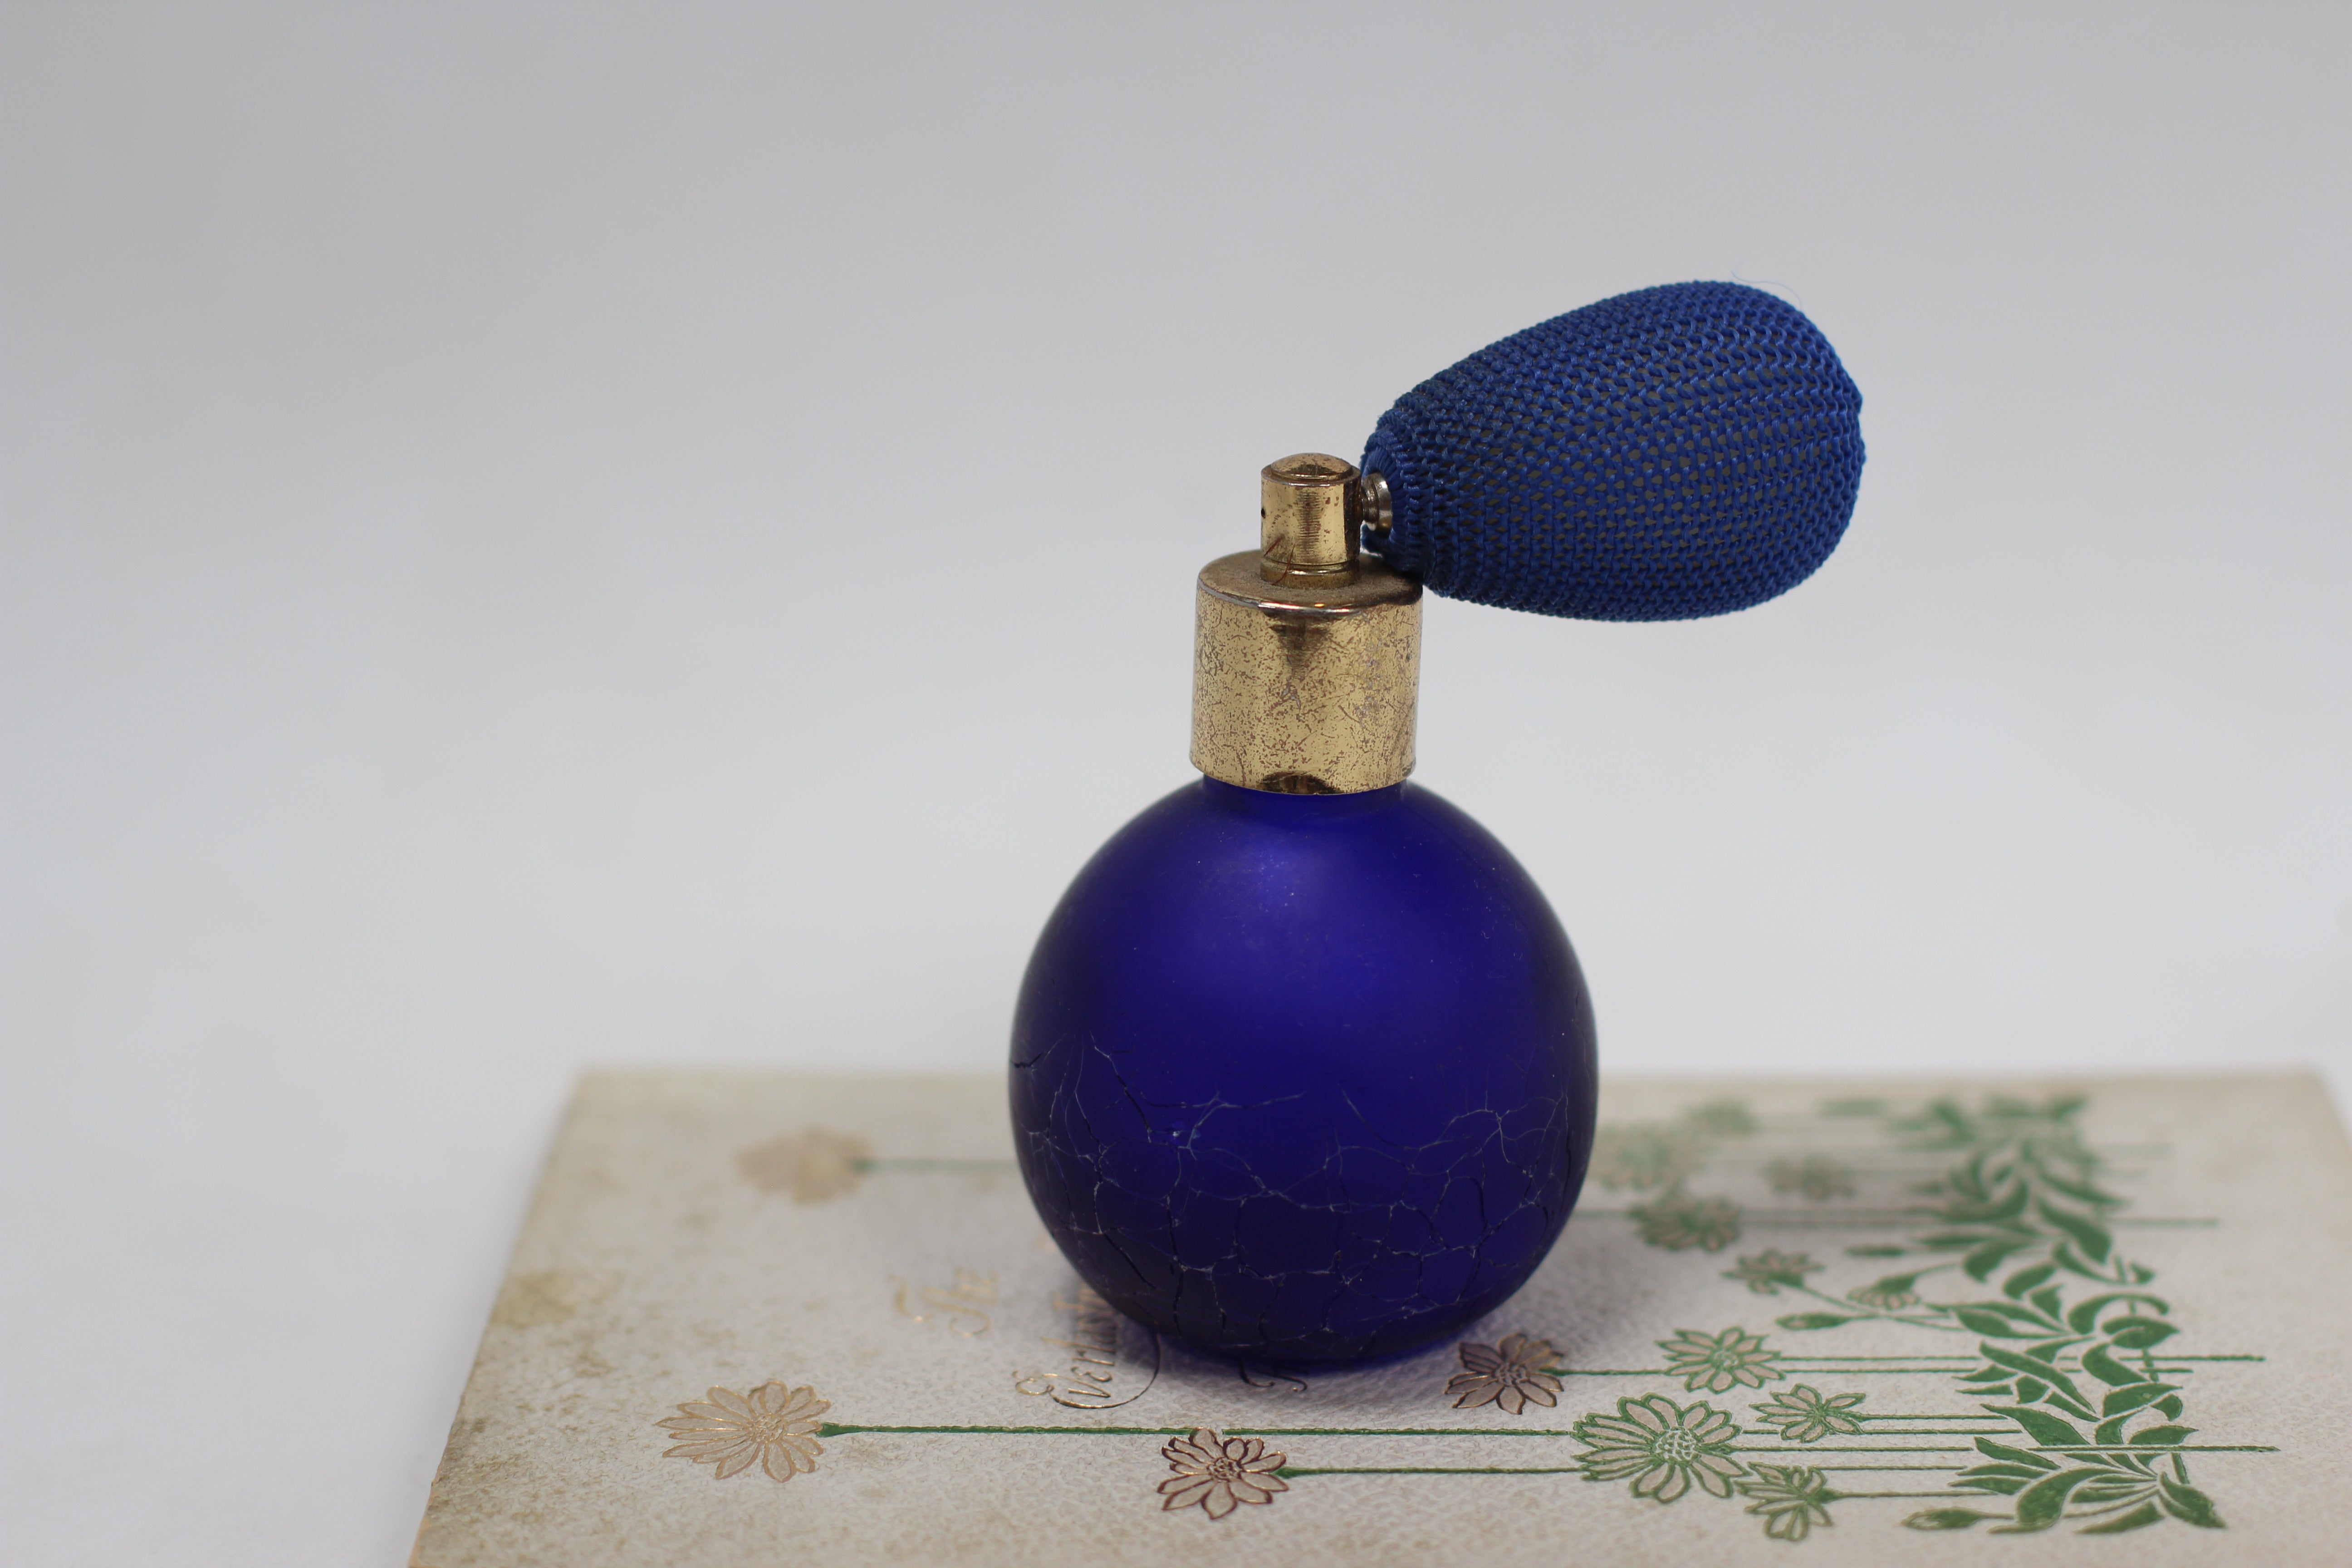 Antique Crackled Royal Blue Automizer Perfume Bottle